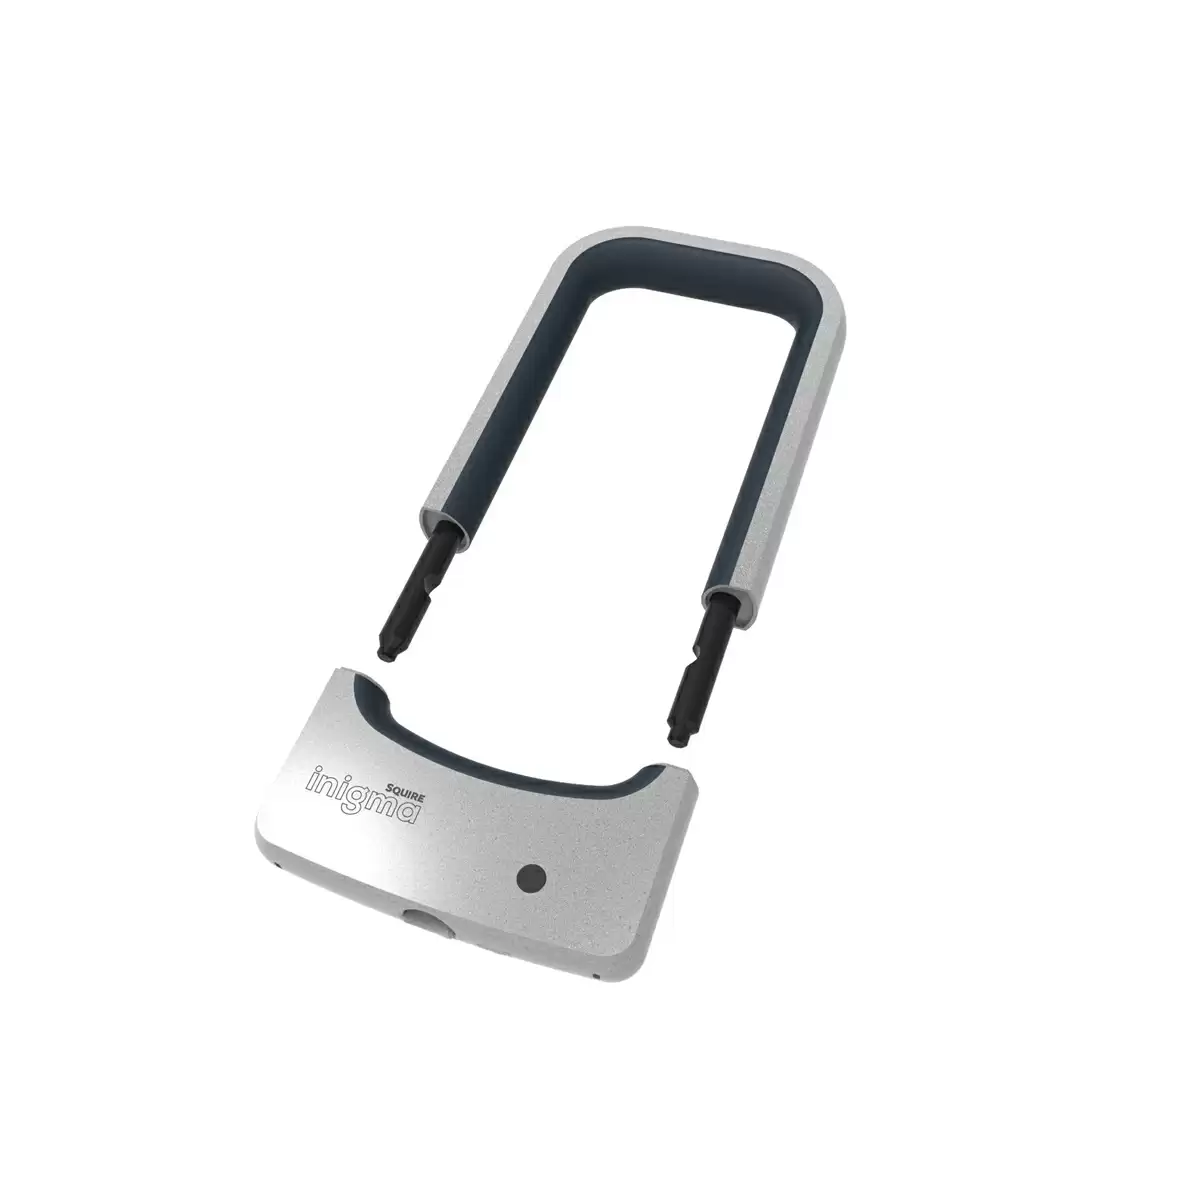 Antivol vélo Bluetooth Inigma BL1 190mm ouverture / fermeture avec Smartphone - image